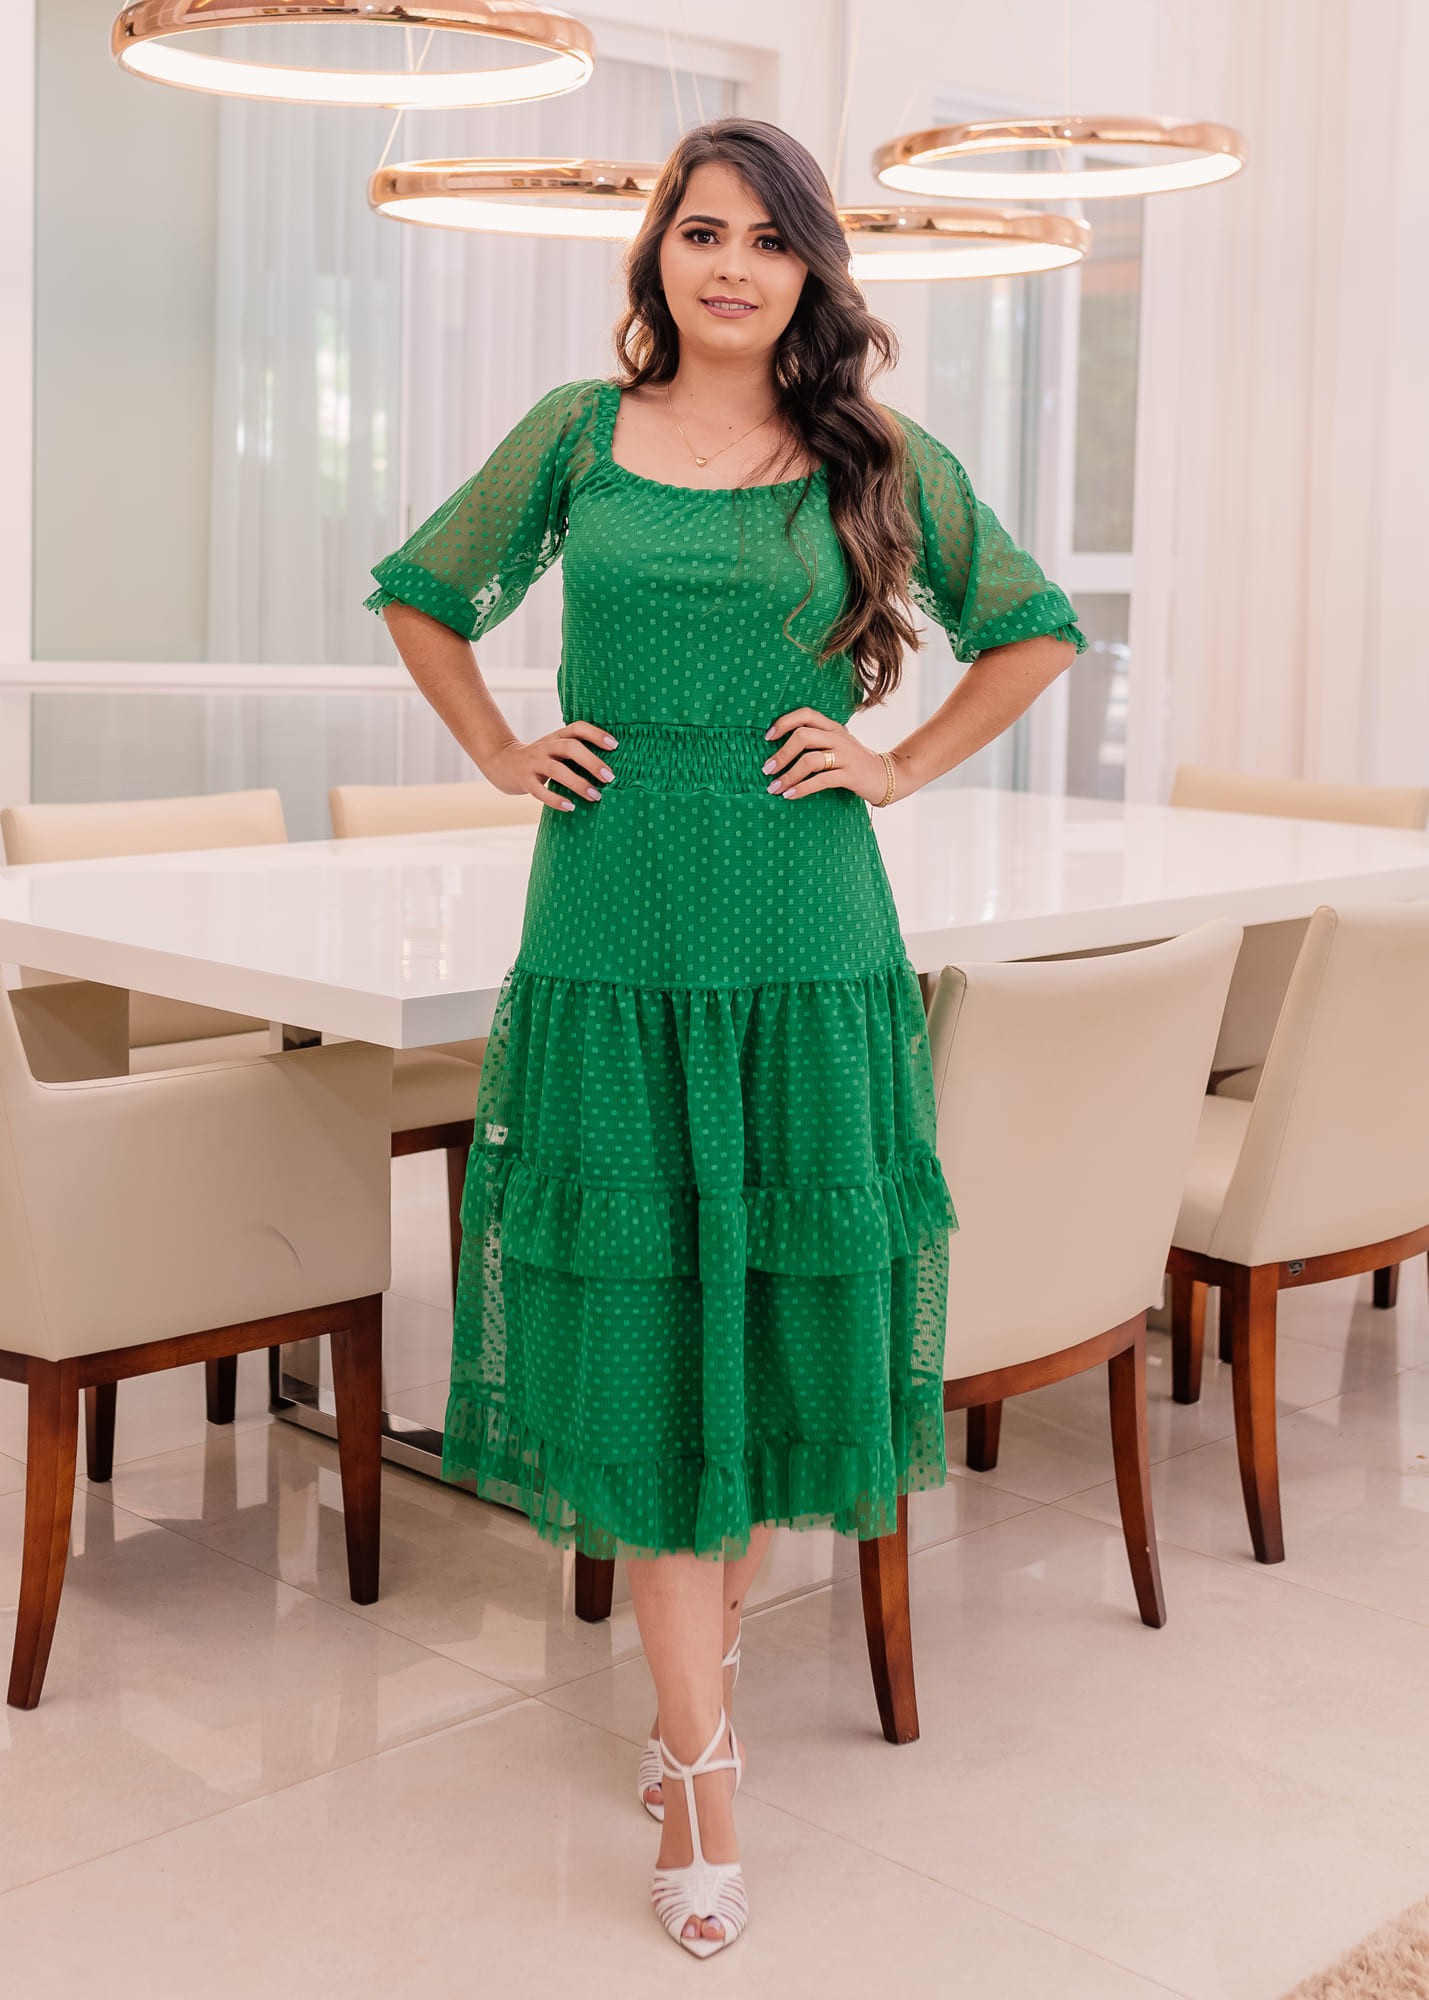 Vestido Midi Evasê Verde Forrado em Tule Poá - Flor de Amêndoa - Moda  Evangélica, Moda Feminina, Moda Cristã, Moda Modesta - Loja Flor de Amêndoa